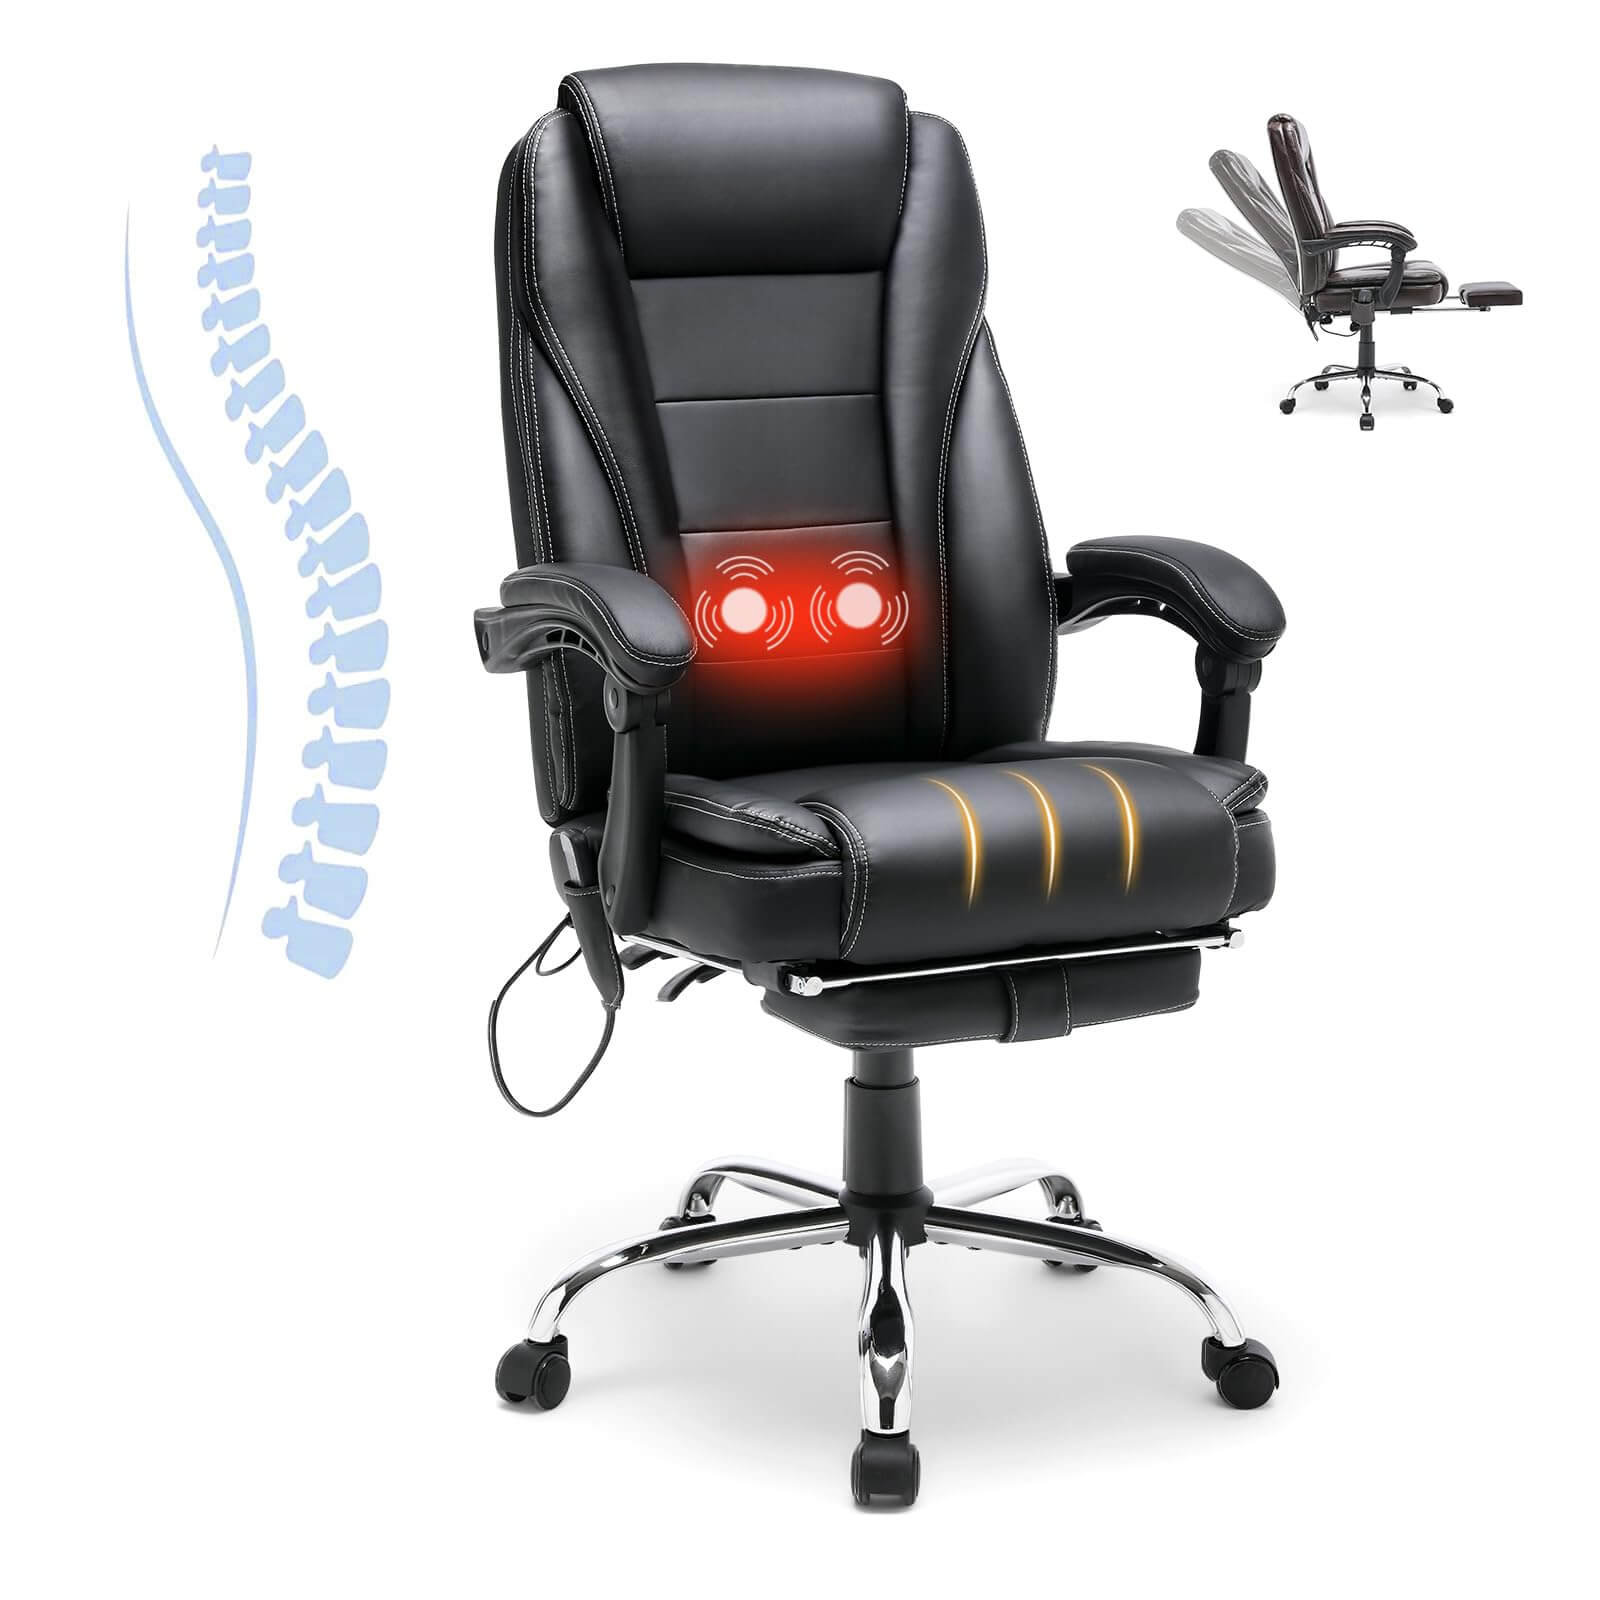 ergonomic-massage-heated-office-chair-black